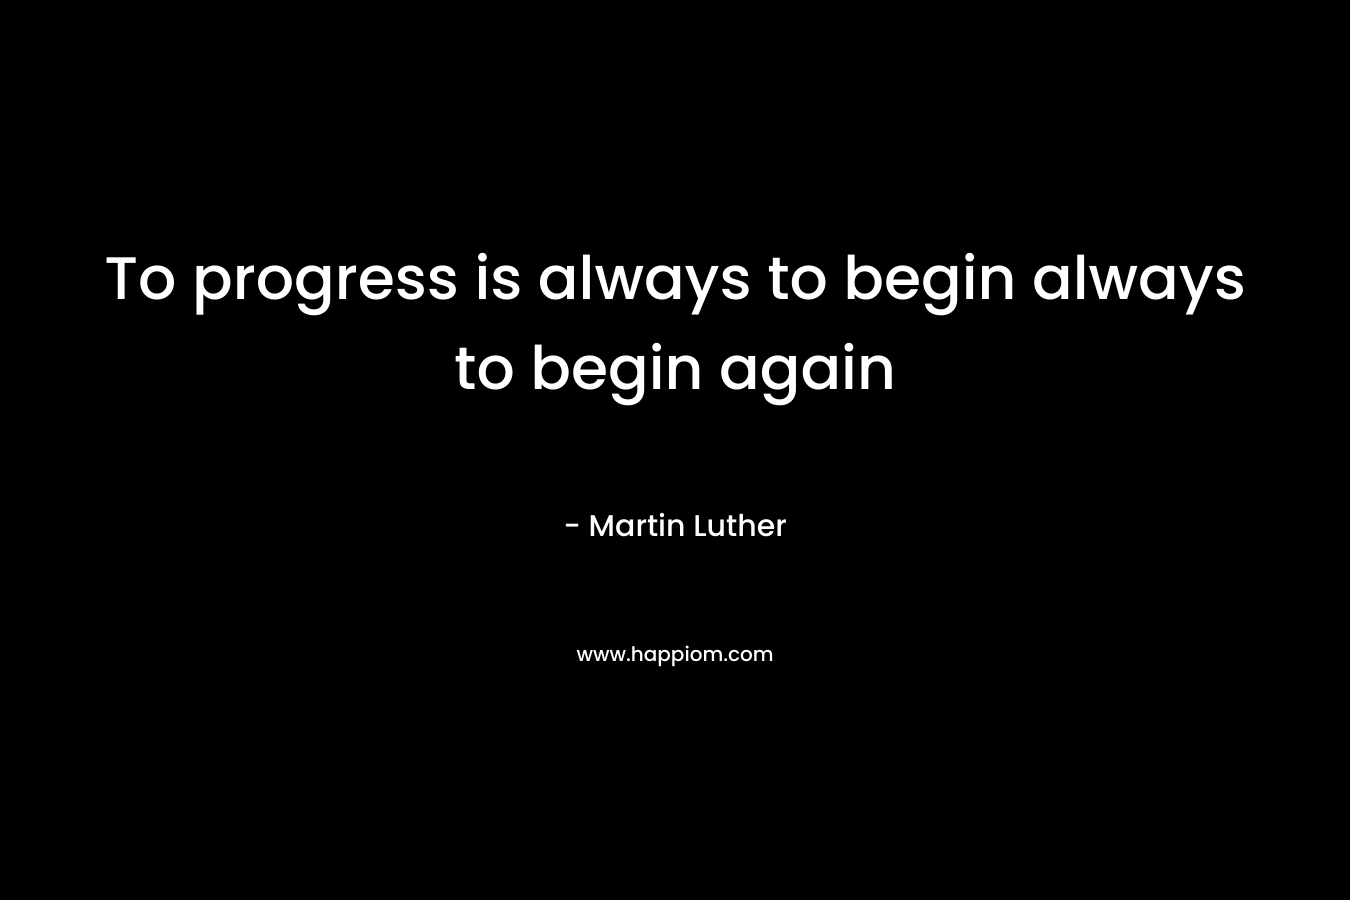 To progress is always to begin always to begin again